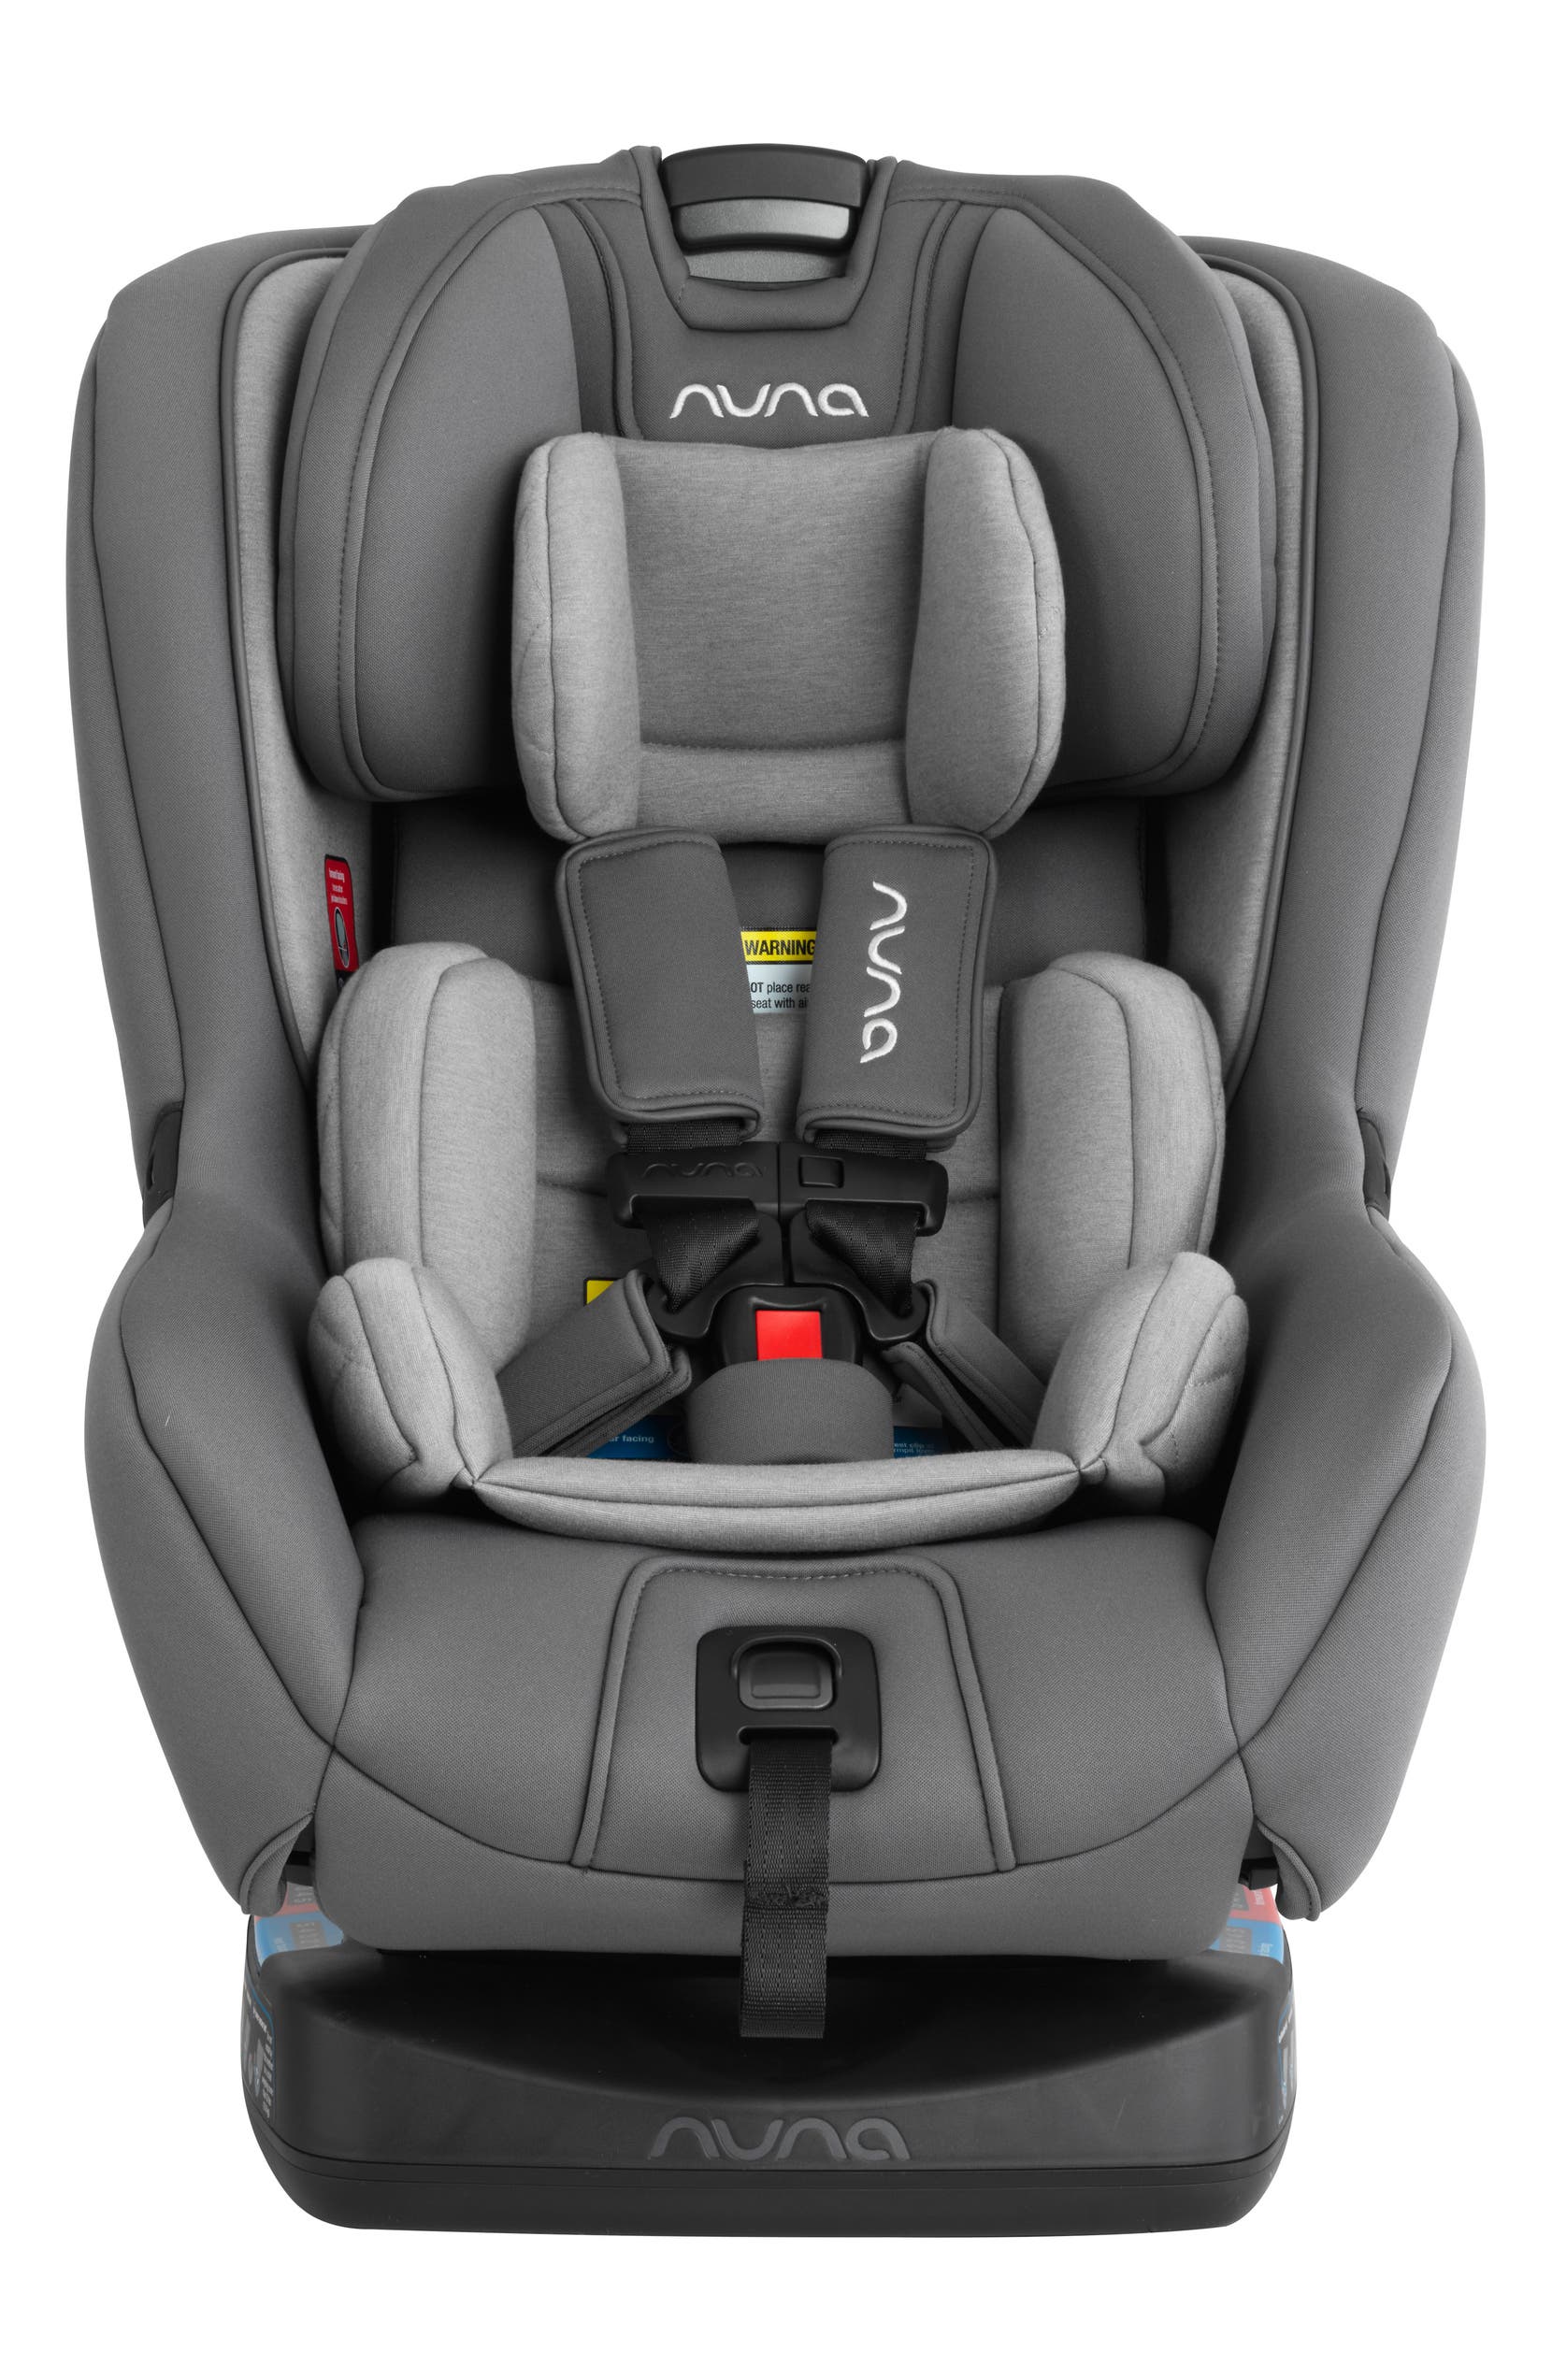  RAVA<sup>â¢</sup> Flame Retardant Free Convertible Car Seat, Main, color, THREADED - NORDSTROM EXCLUSIVE